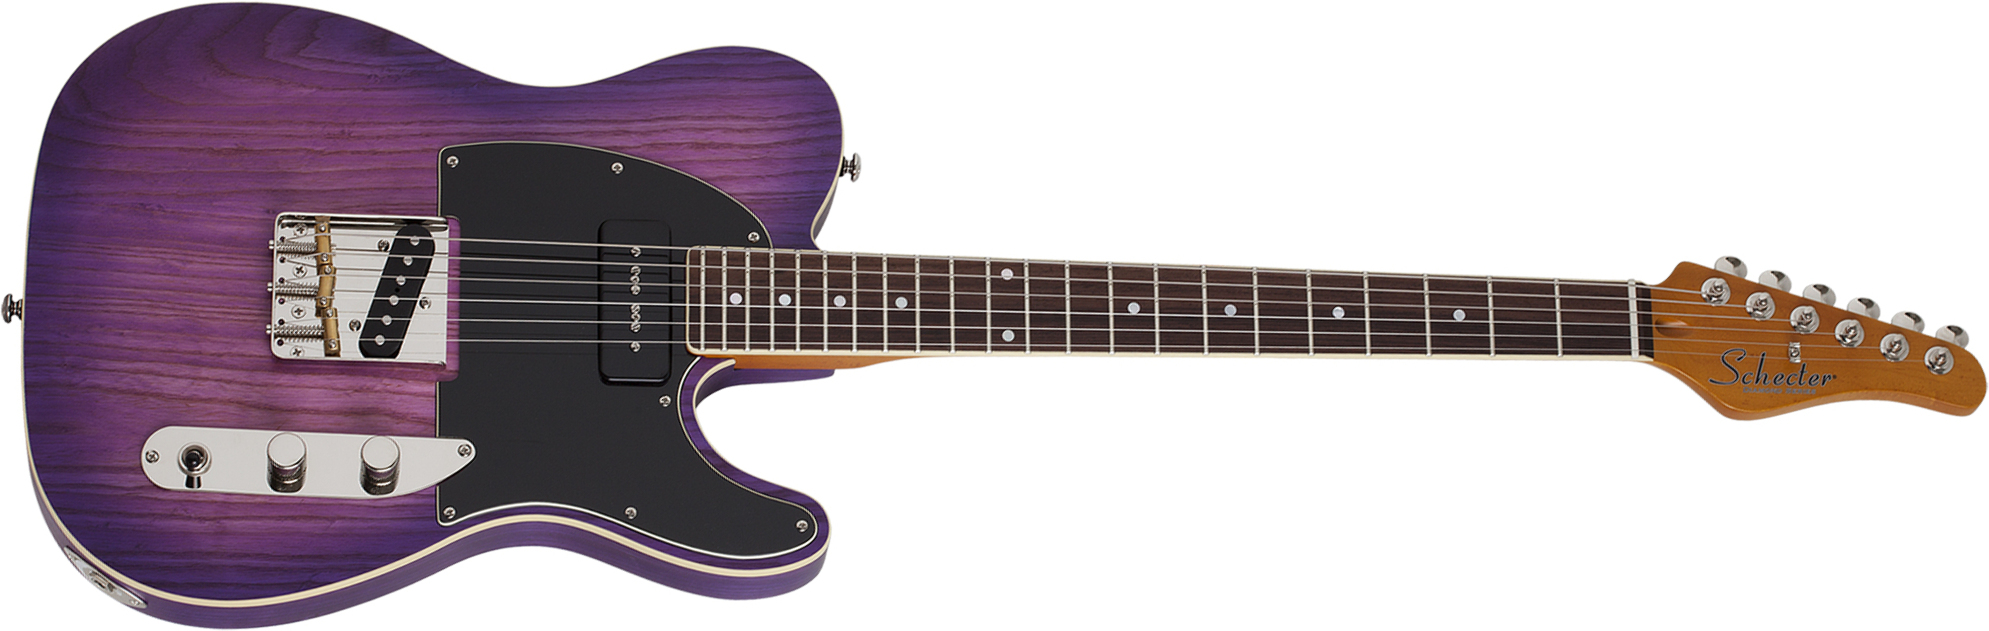 Schecter Pt Special 2s Ht Rw - Purple Burst Pearl - Guitarra eléctrica con forma de tel - Main picture